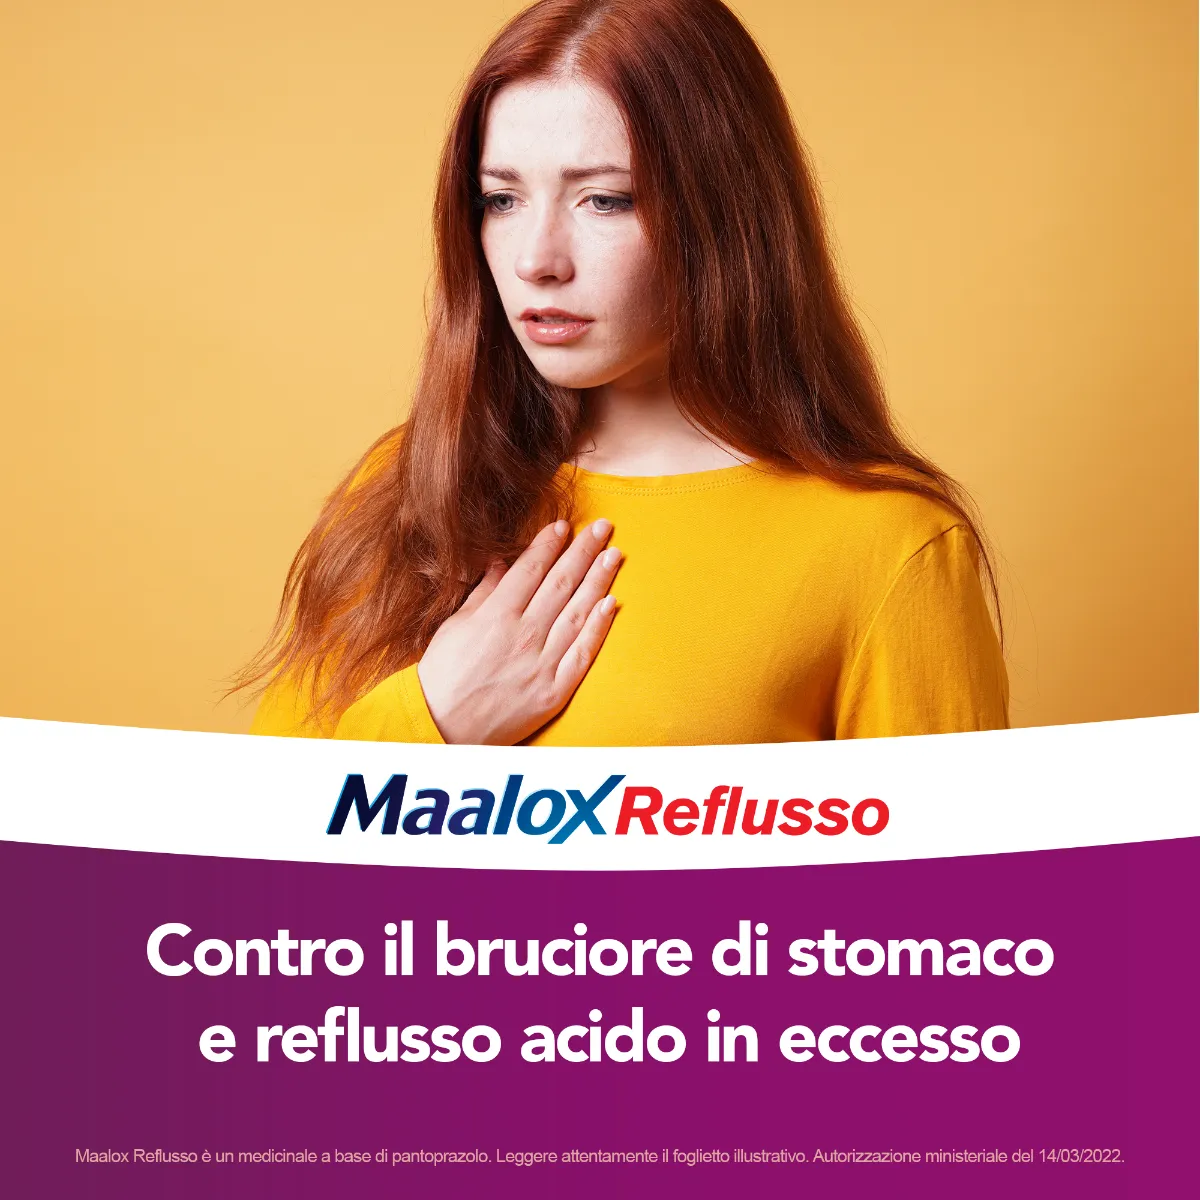 Maalox Reflusso 20 mg 7 Compresse Pantoprazolo